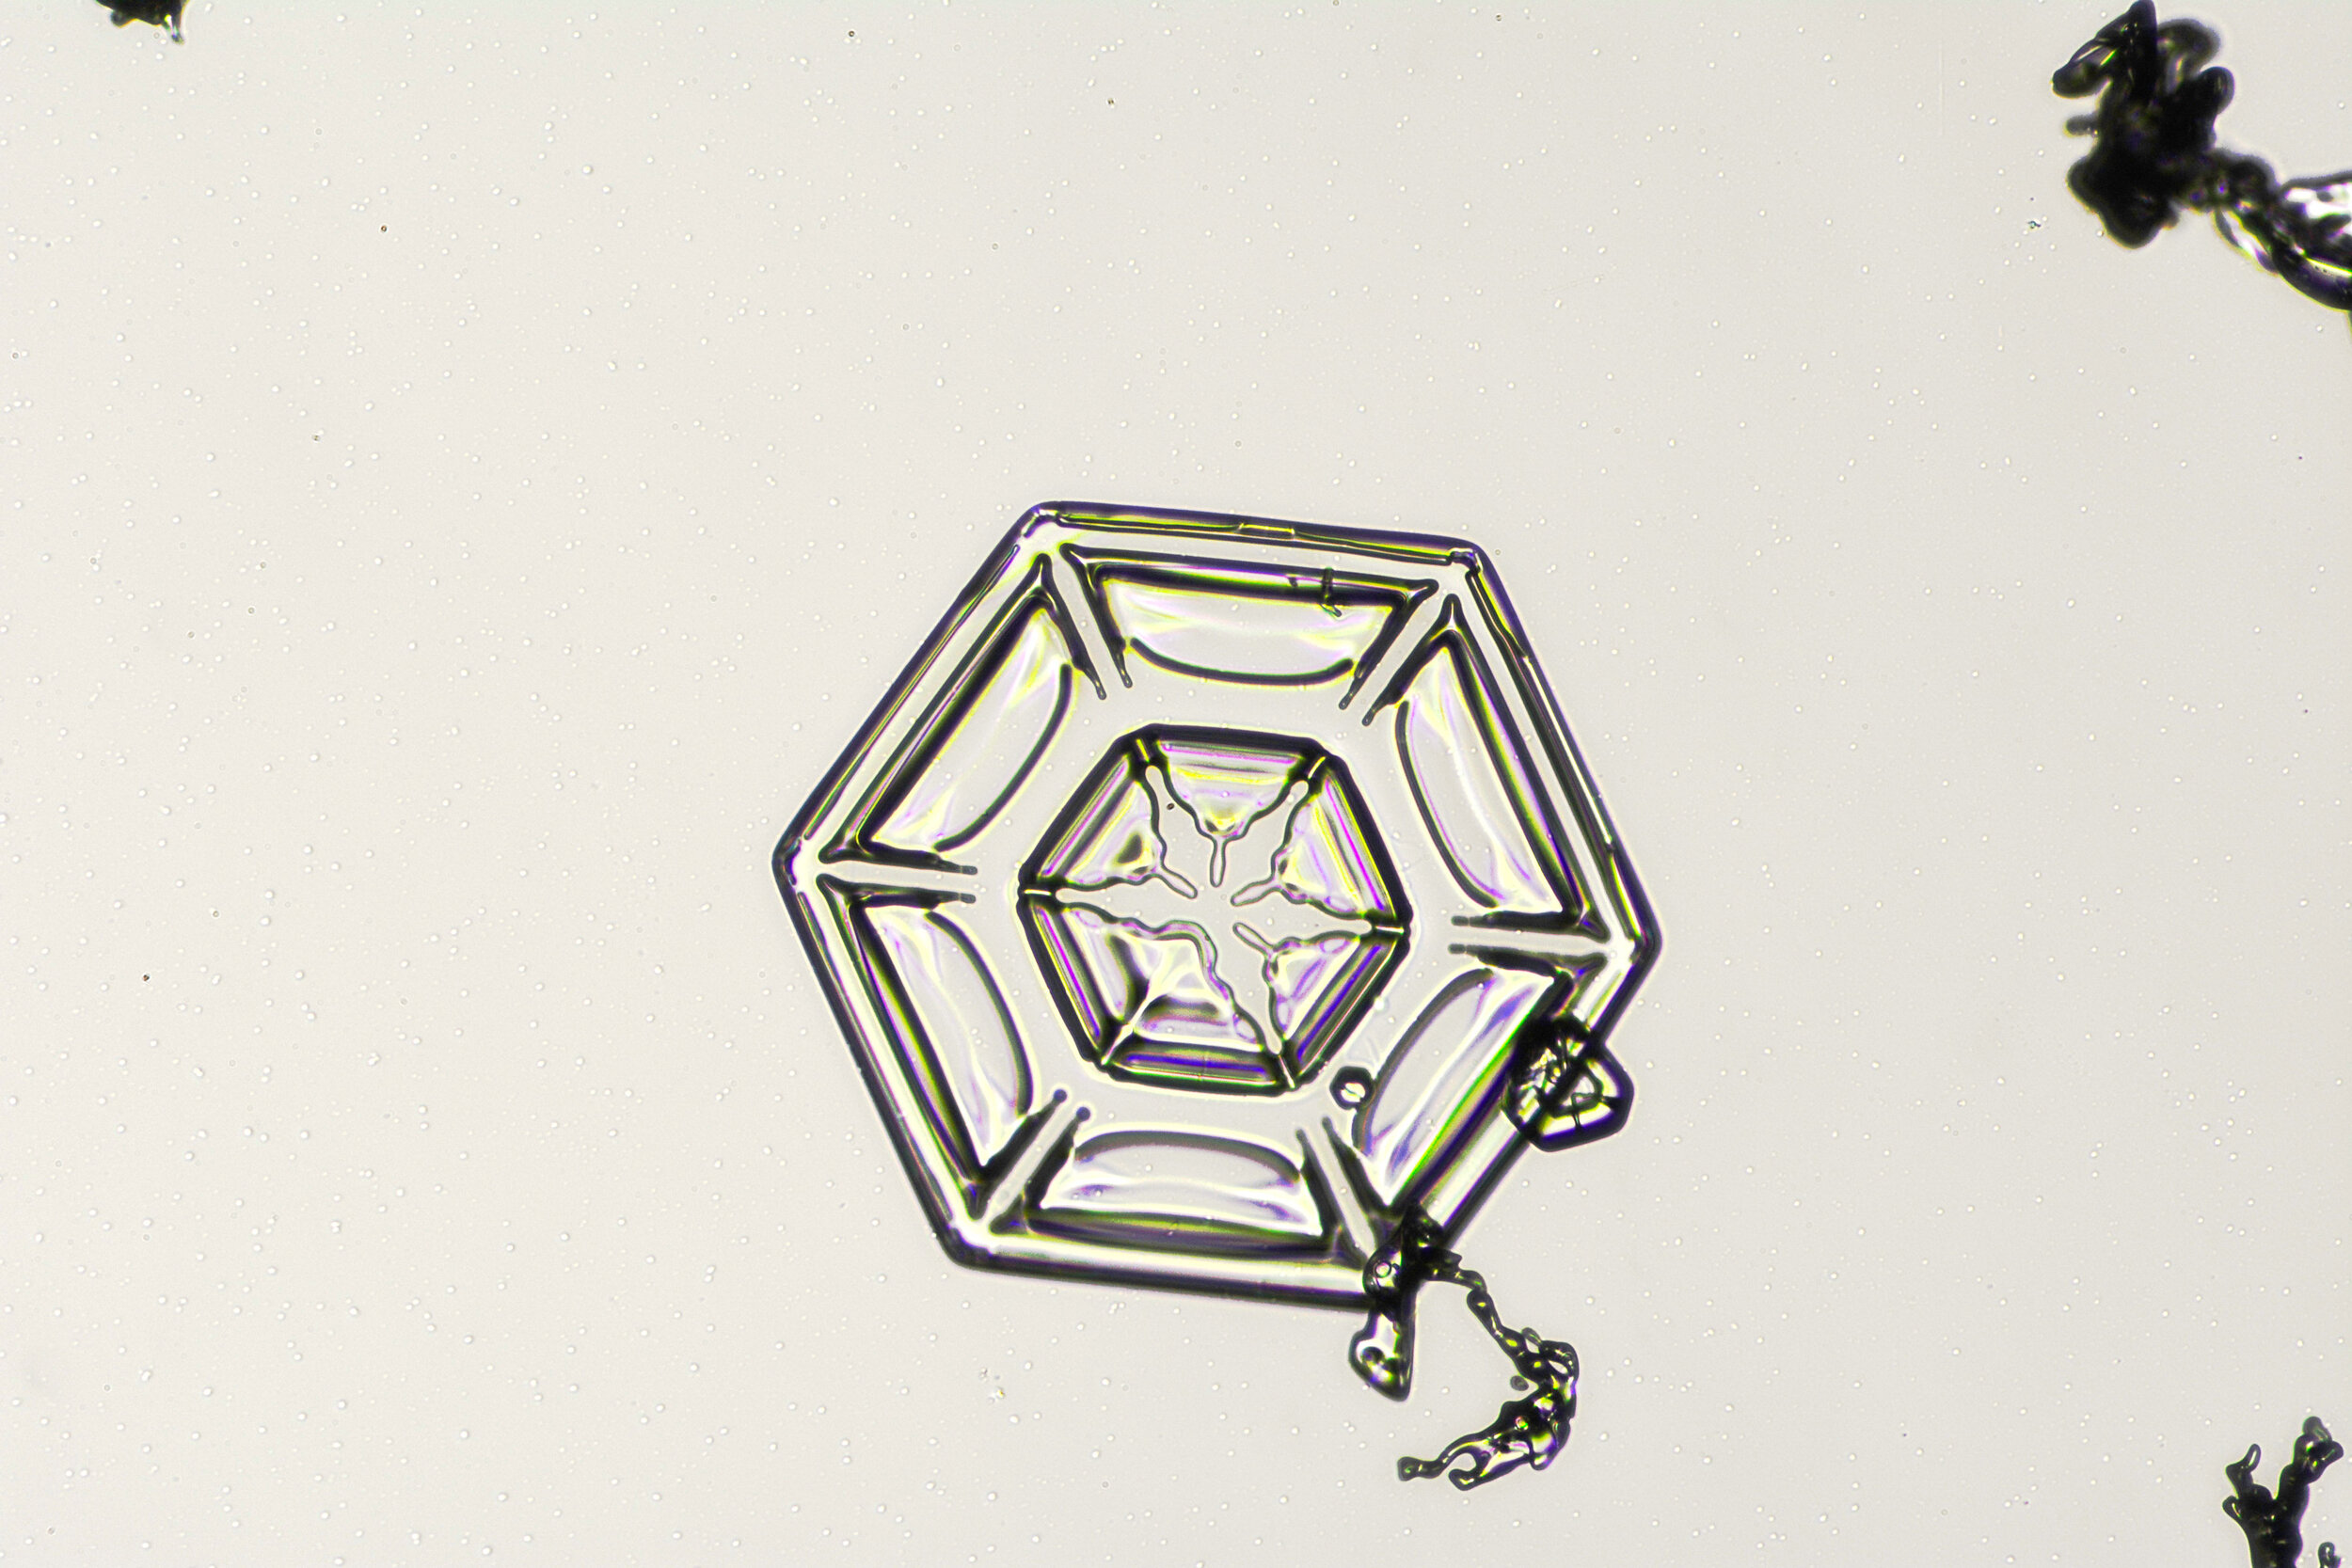 Gary-Mawe-Hexagonal-Plate-Snowflake-10.jpg